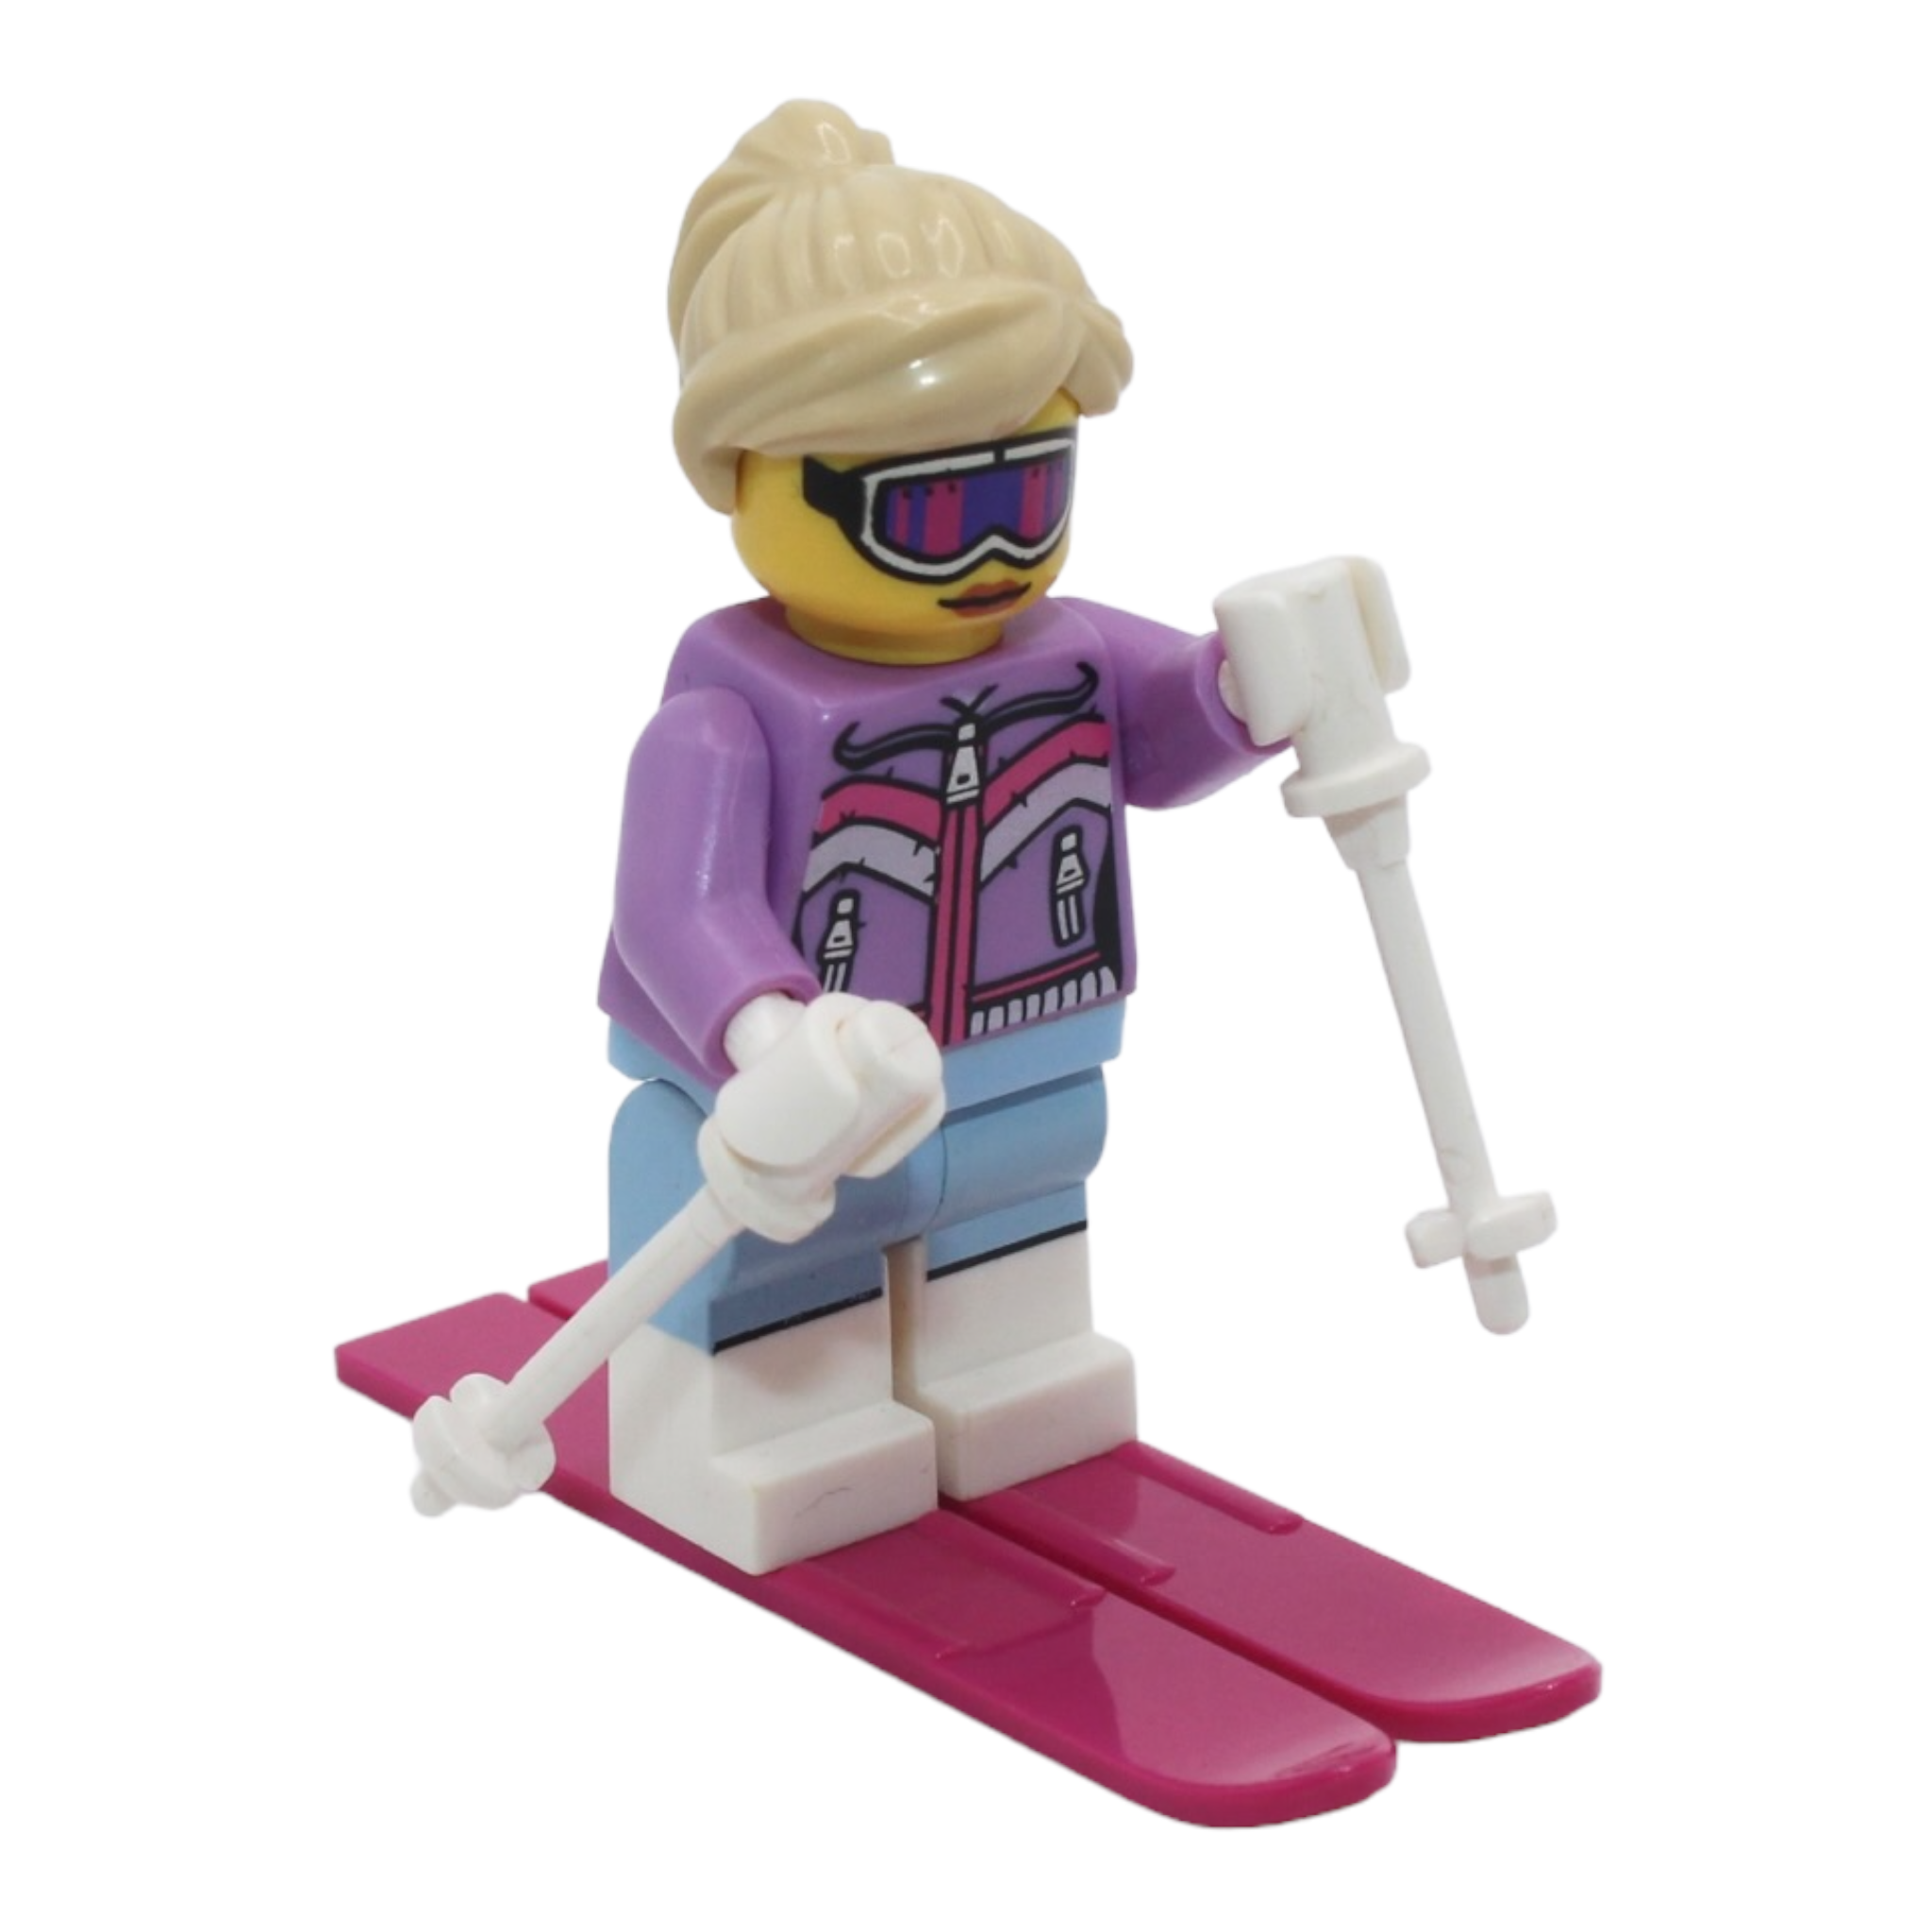 LEGO Series 8: Downhill Skier